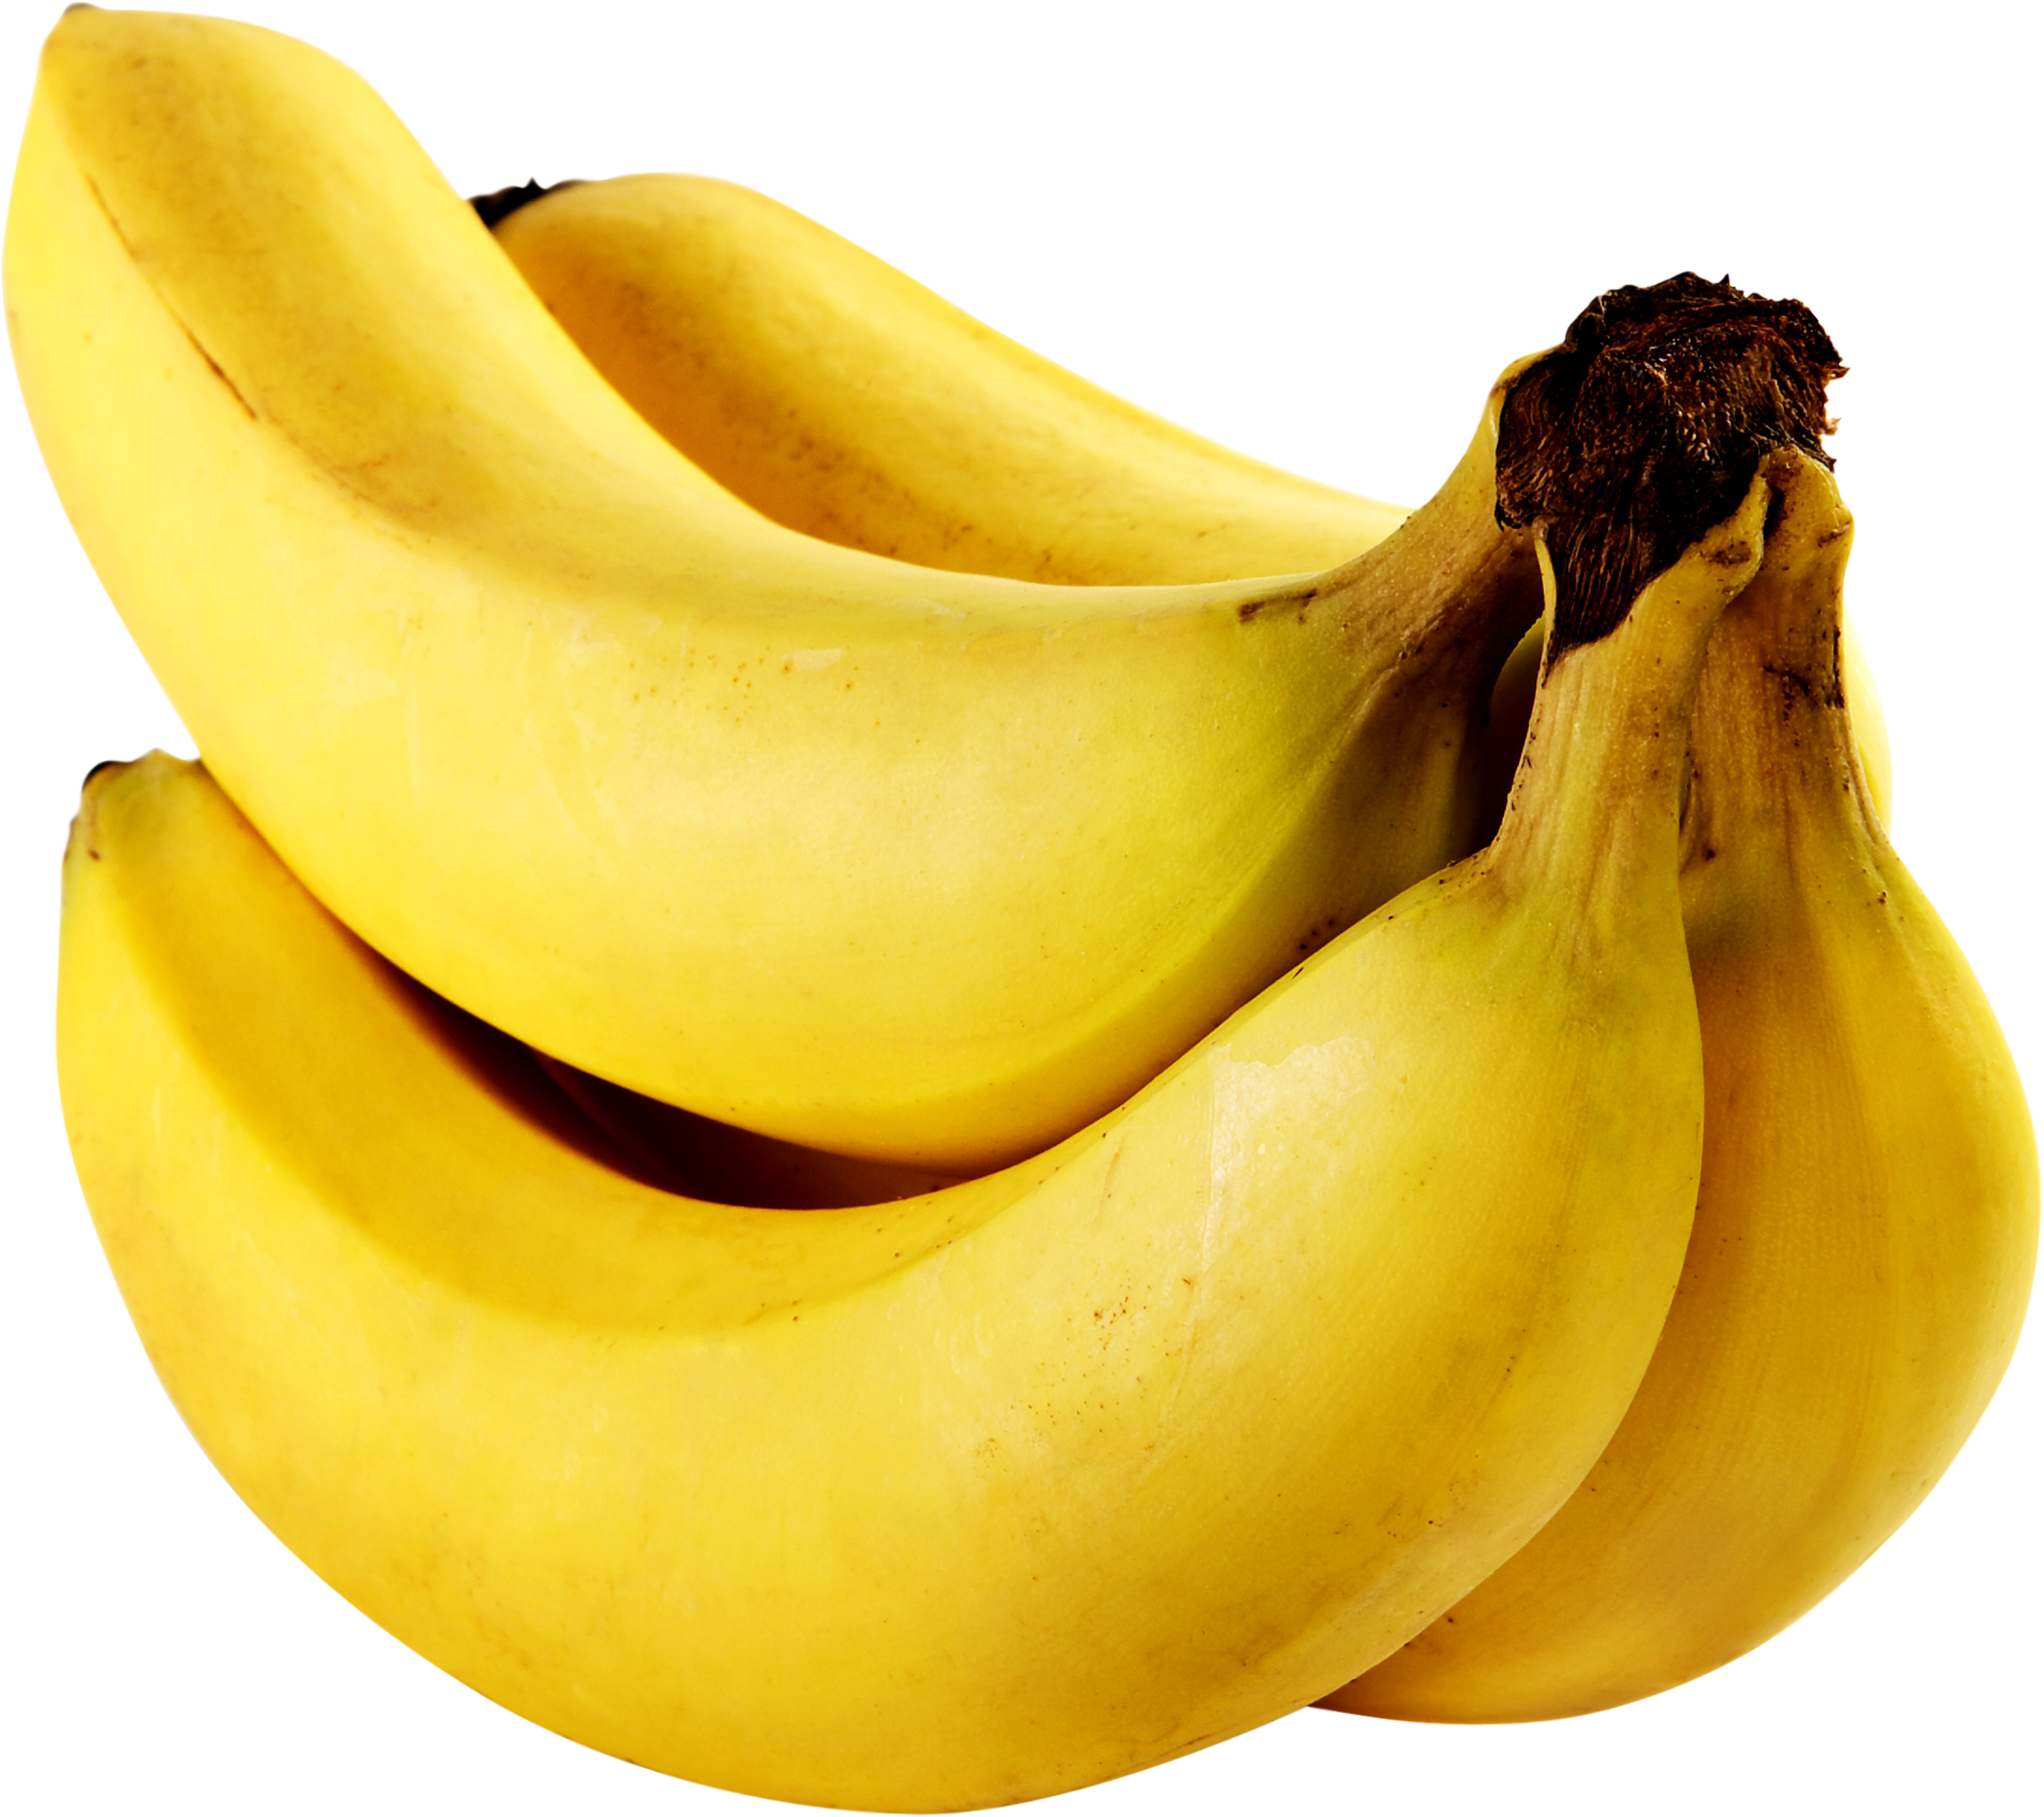 Banana png image free. Vegetables clipart seasonal food